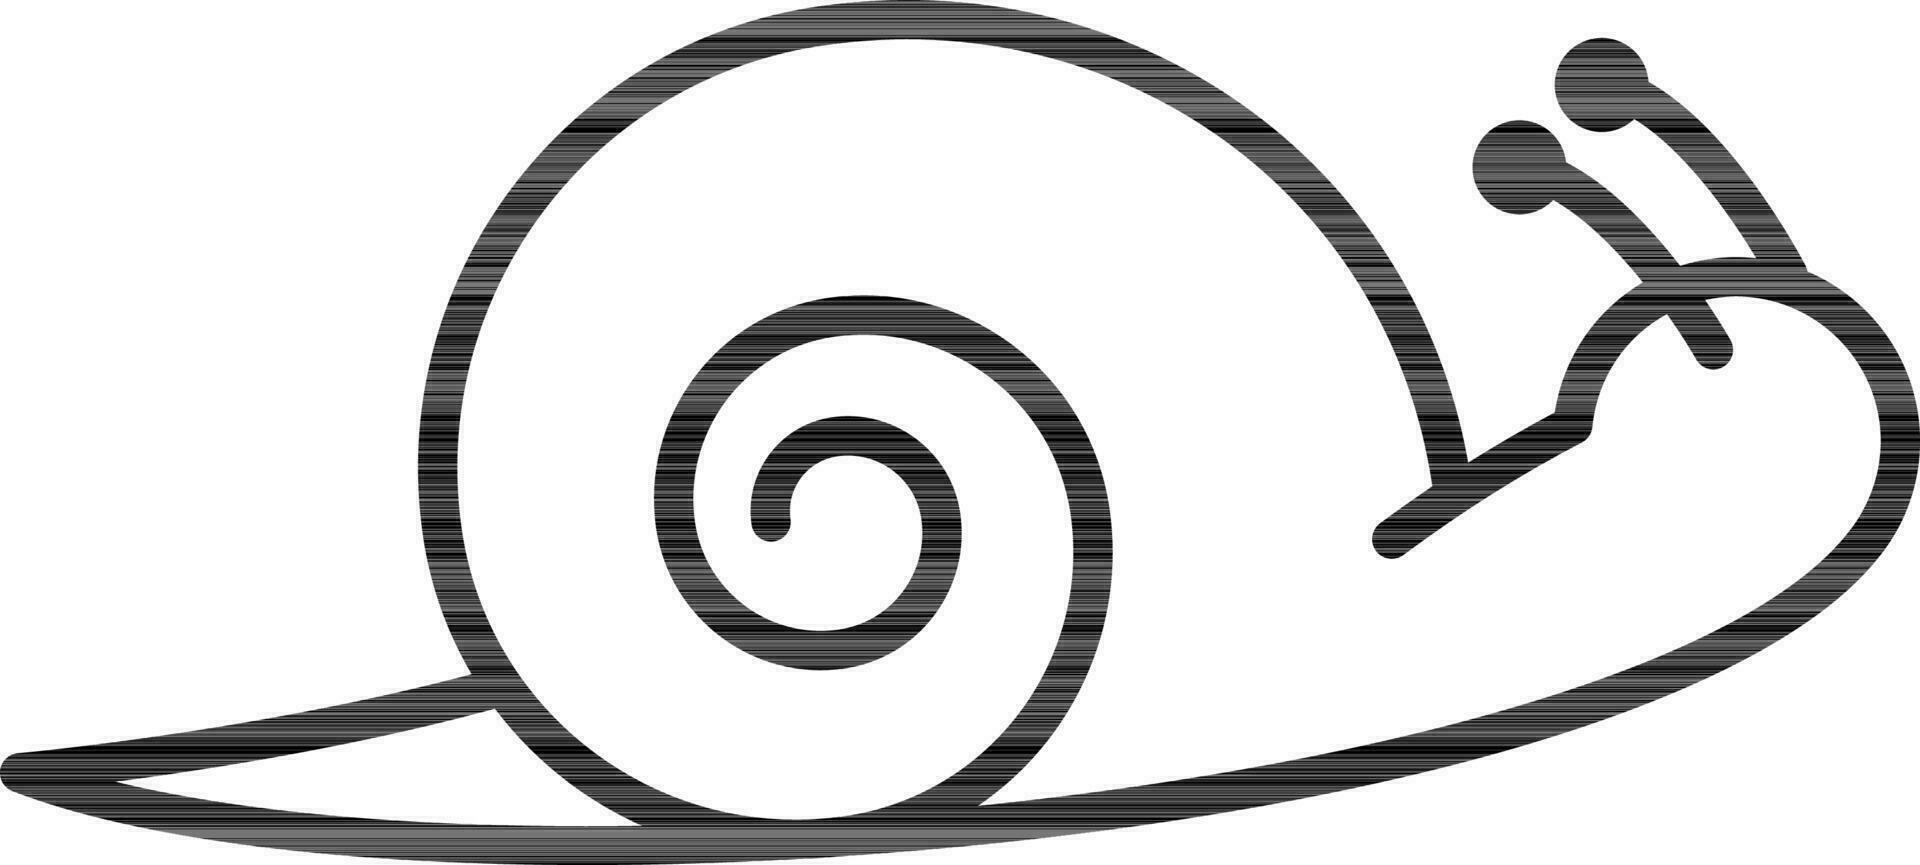 Illustration of Snail icon in black line art. vector